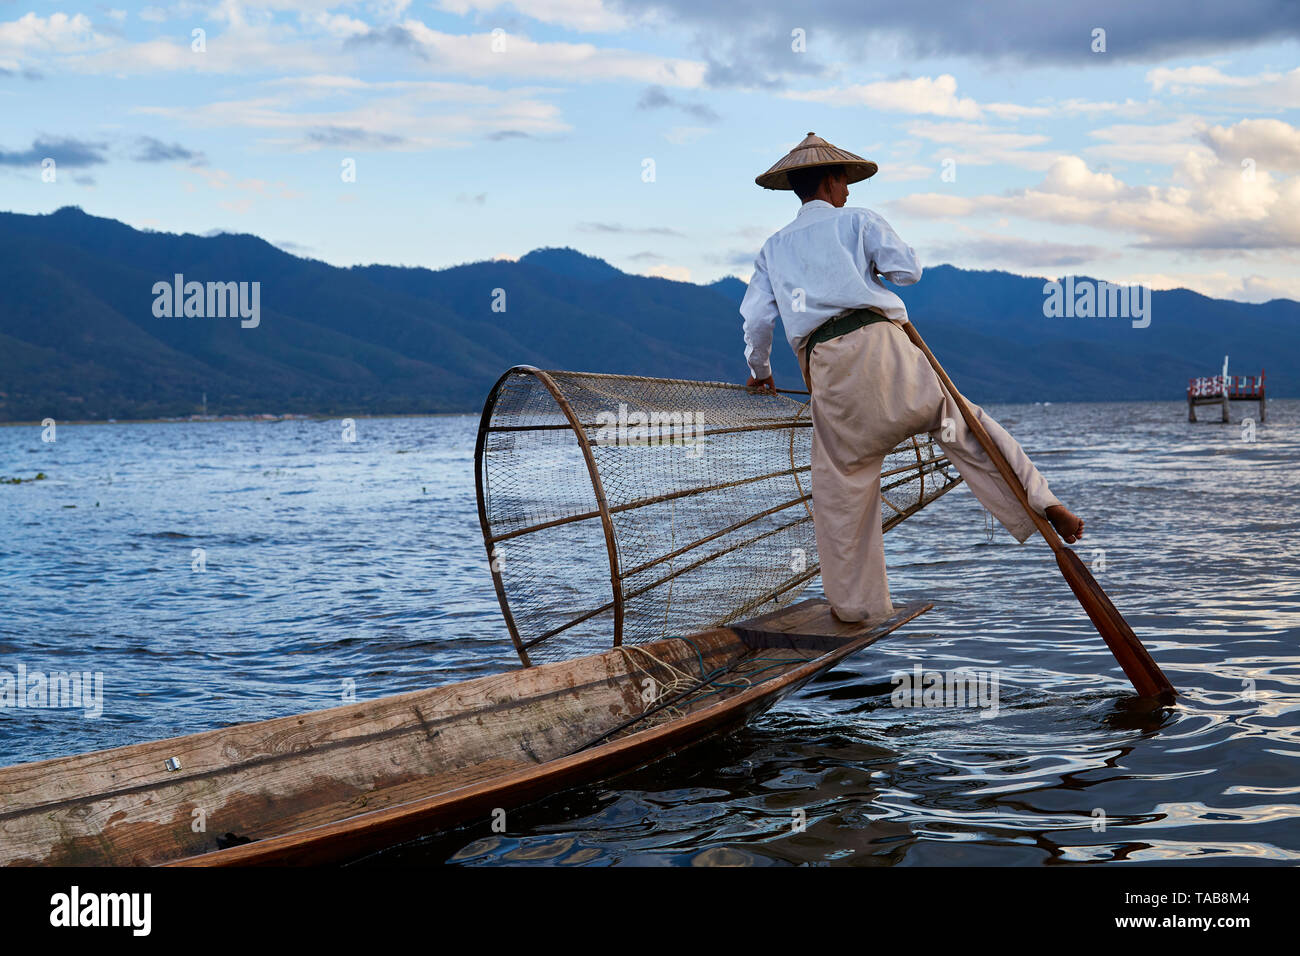 Traditional fisherman with net on boat on Inle Lake, Myanmar. Stock Photo